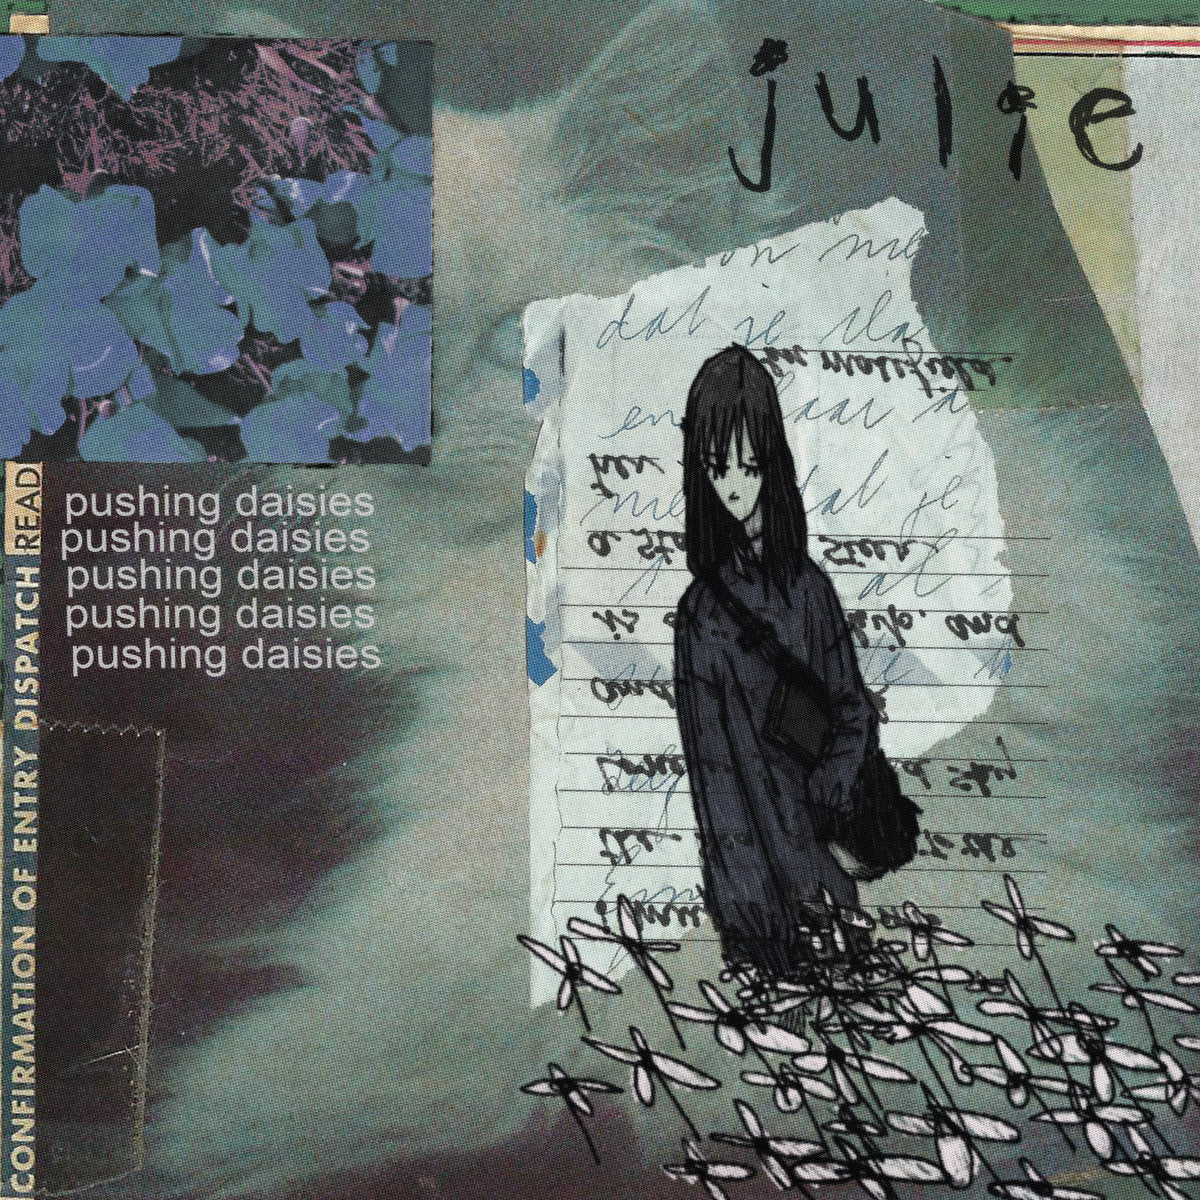 JULIE - PUSHING DAISIES Vinyl 10" EP